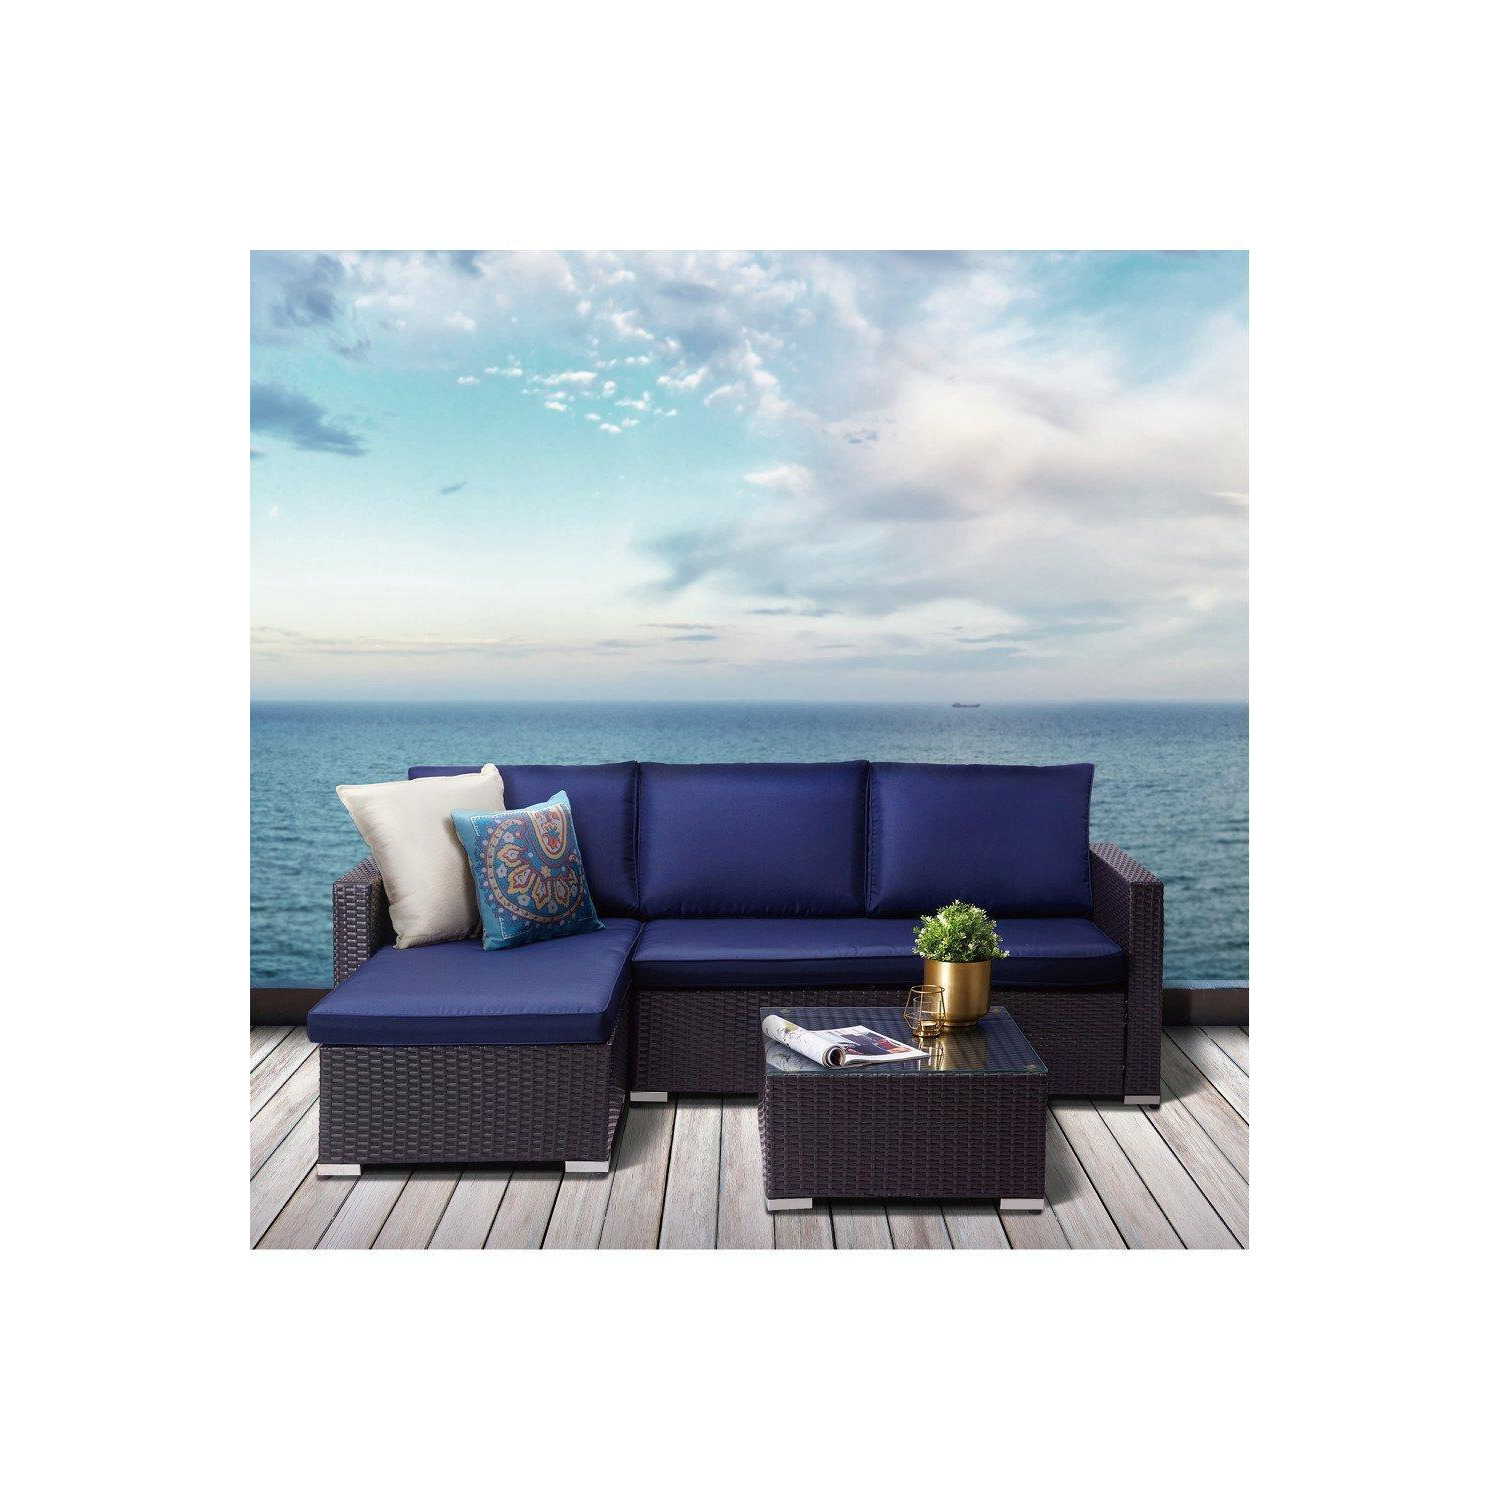 Outdoor Garden Furniture,Rattan Wicker Patio Sectional Sofa Set - image 1